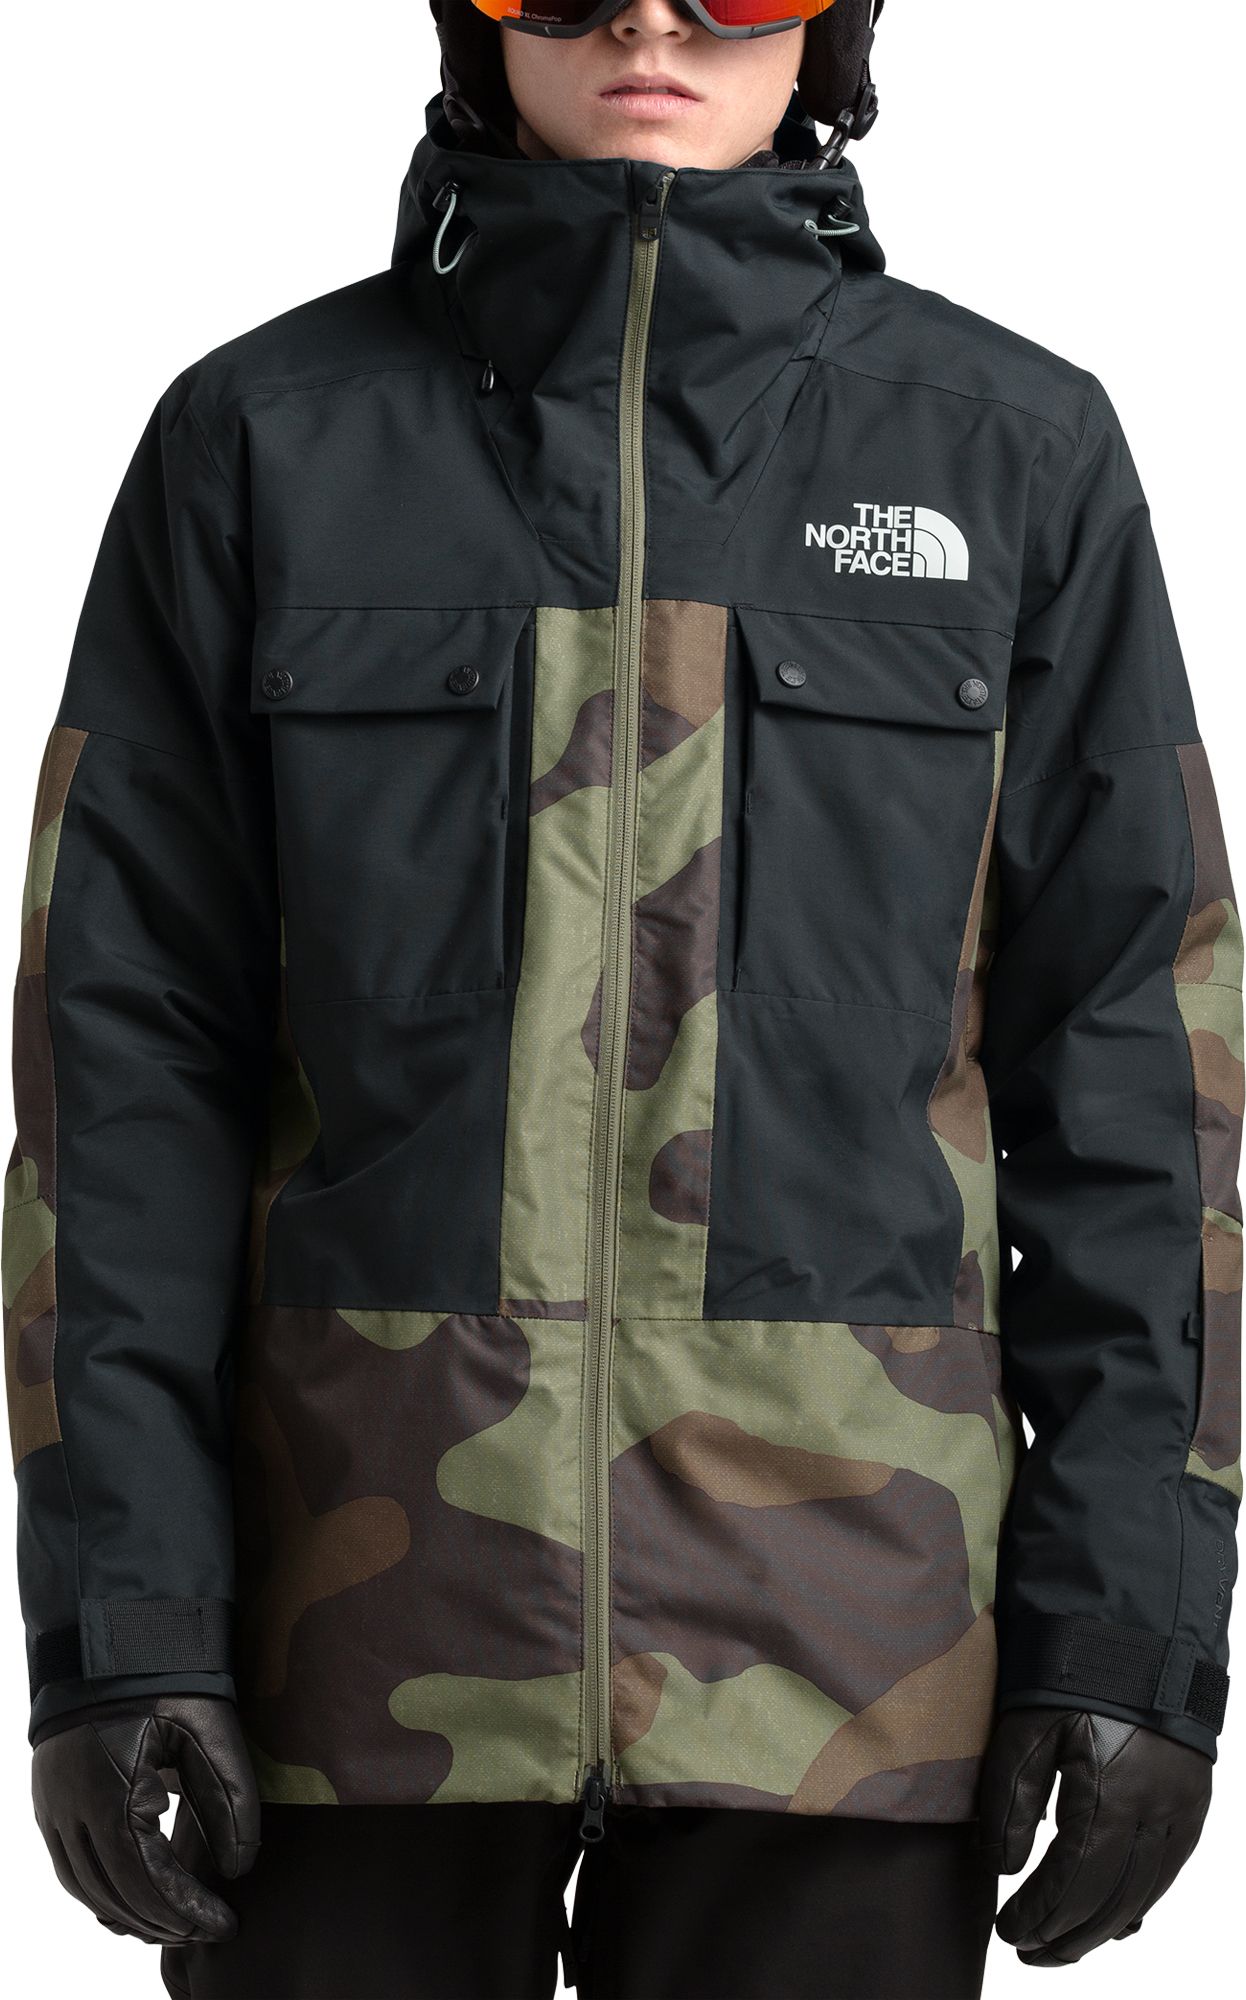 The North Face Men's Balfron Winter Jacket - 7.97